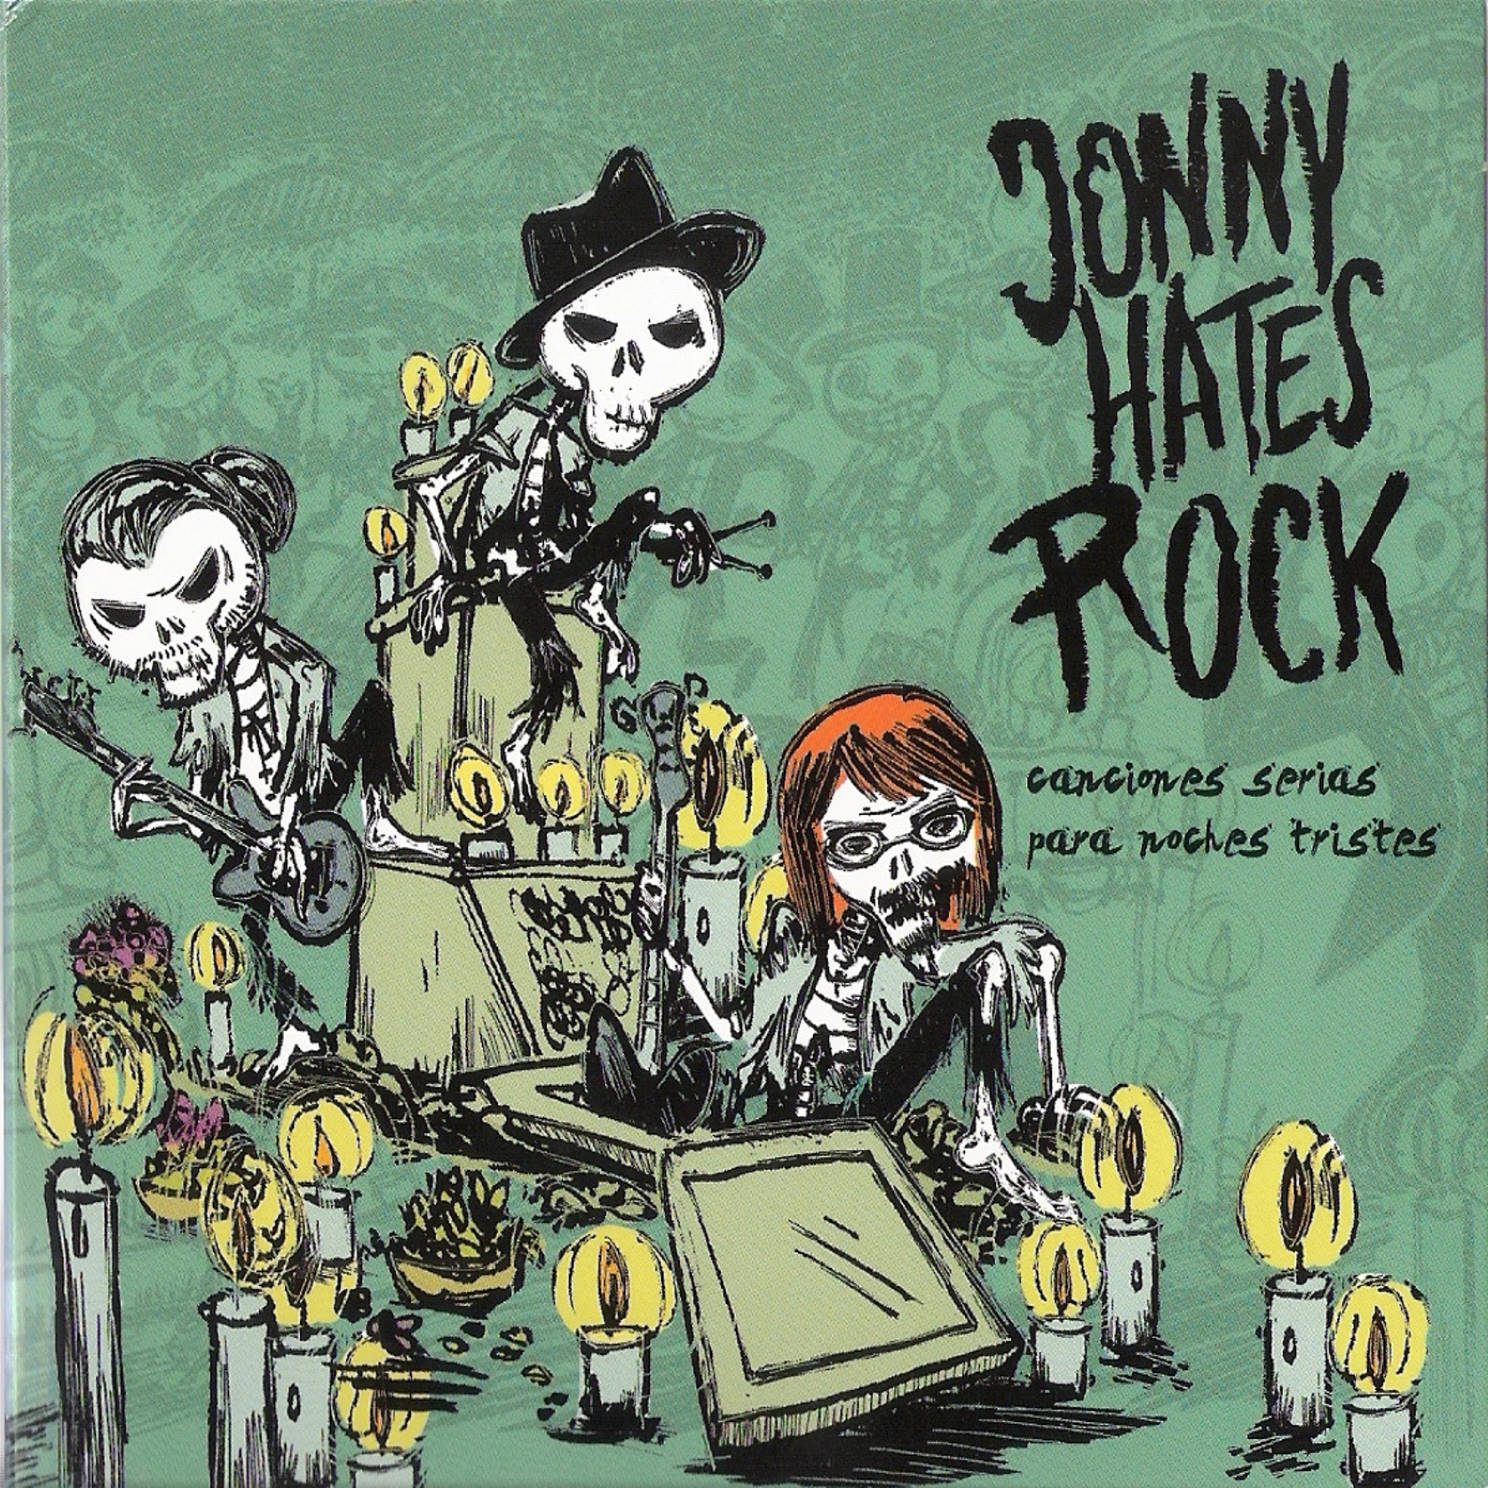 Jonny hates Rock